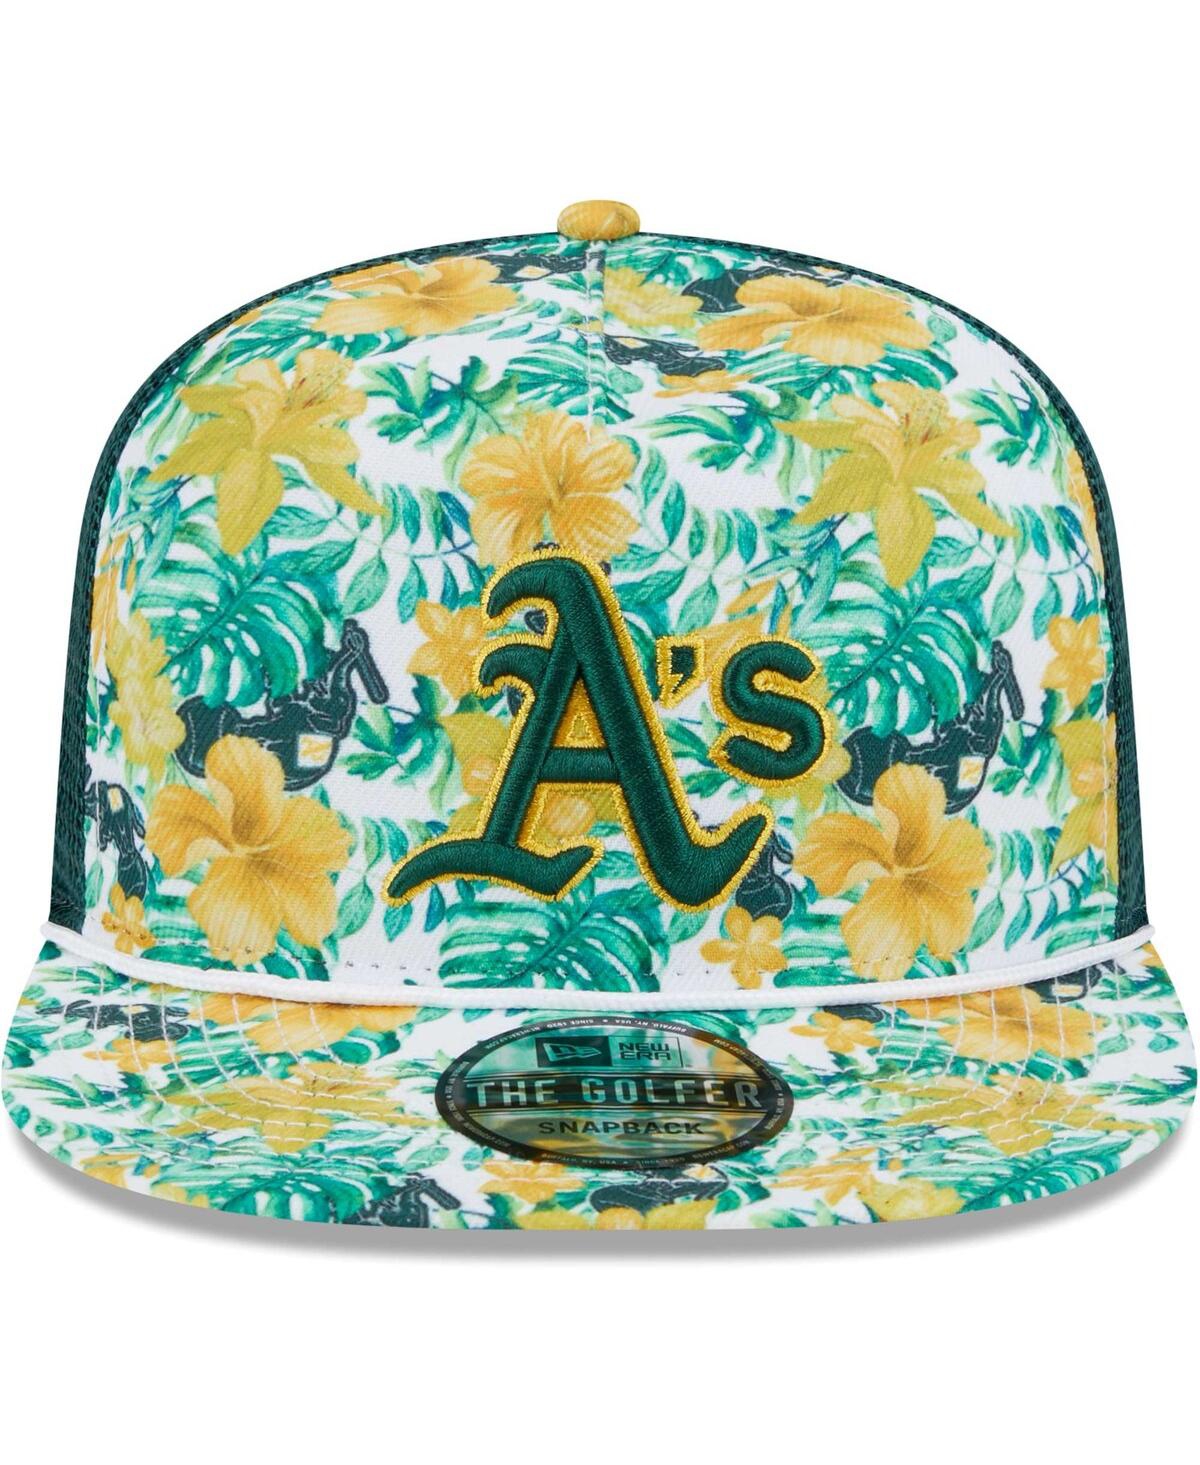 Shop New Era Men's  Oakland Athletics Tropic Floral Golfer Snapback Hat In Green